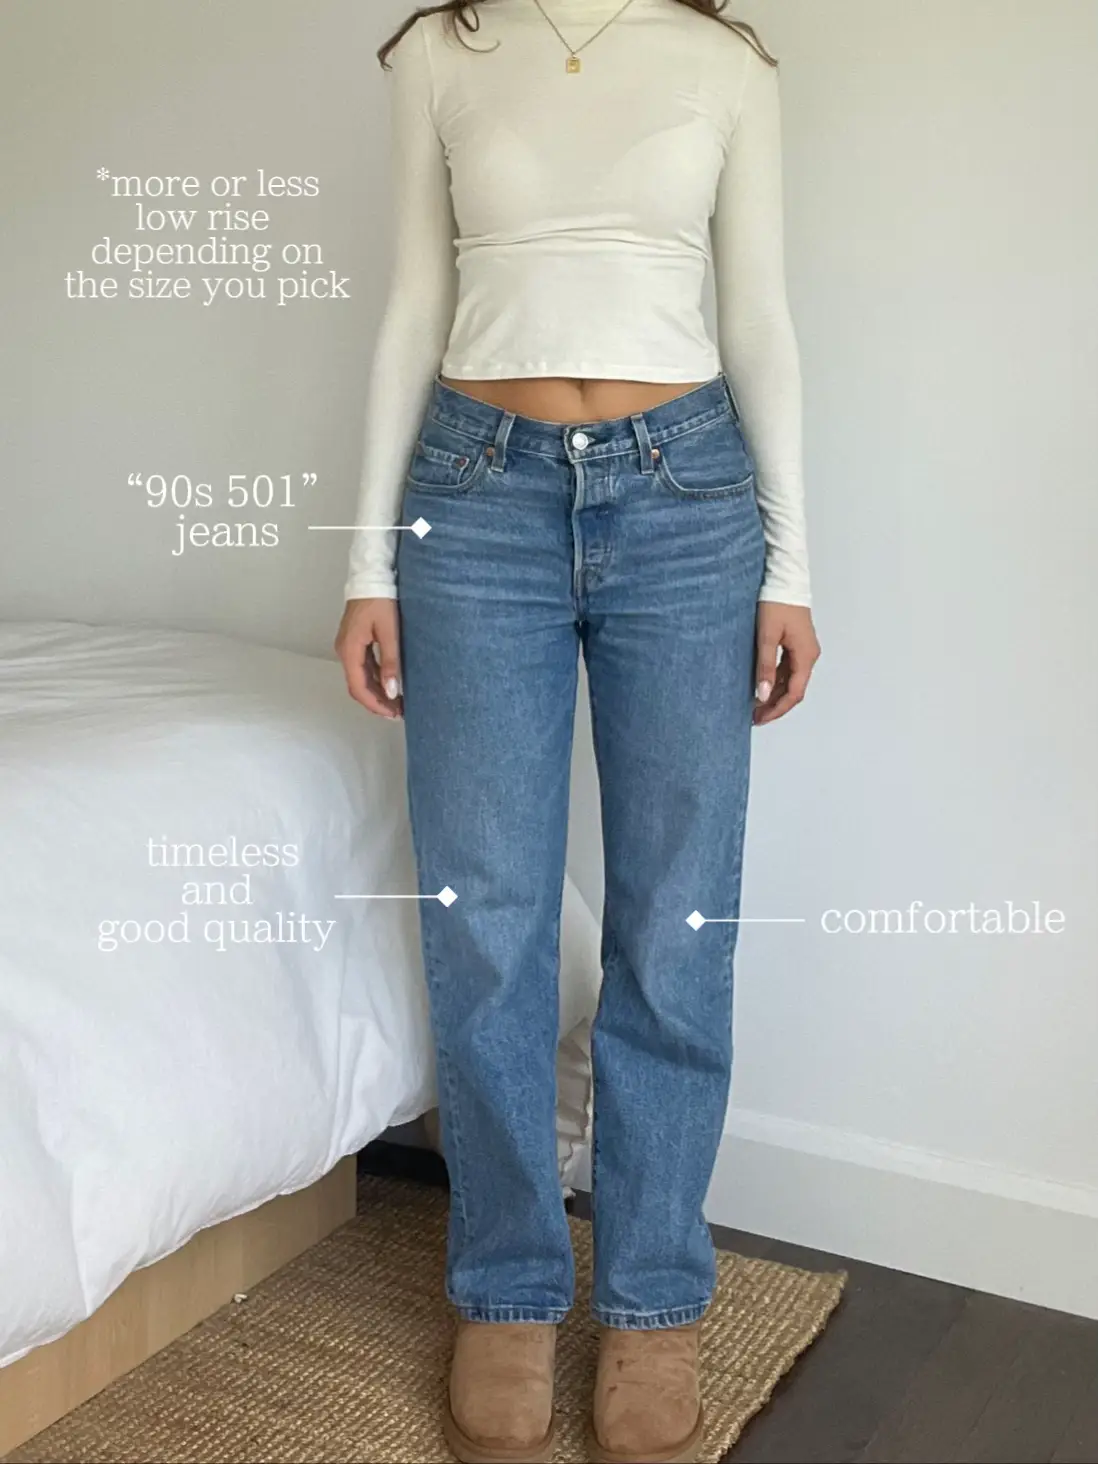 Low waist denim booty shorts – Donna di Capri